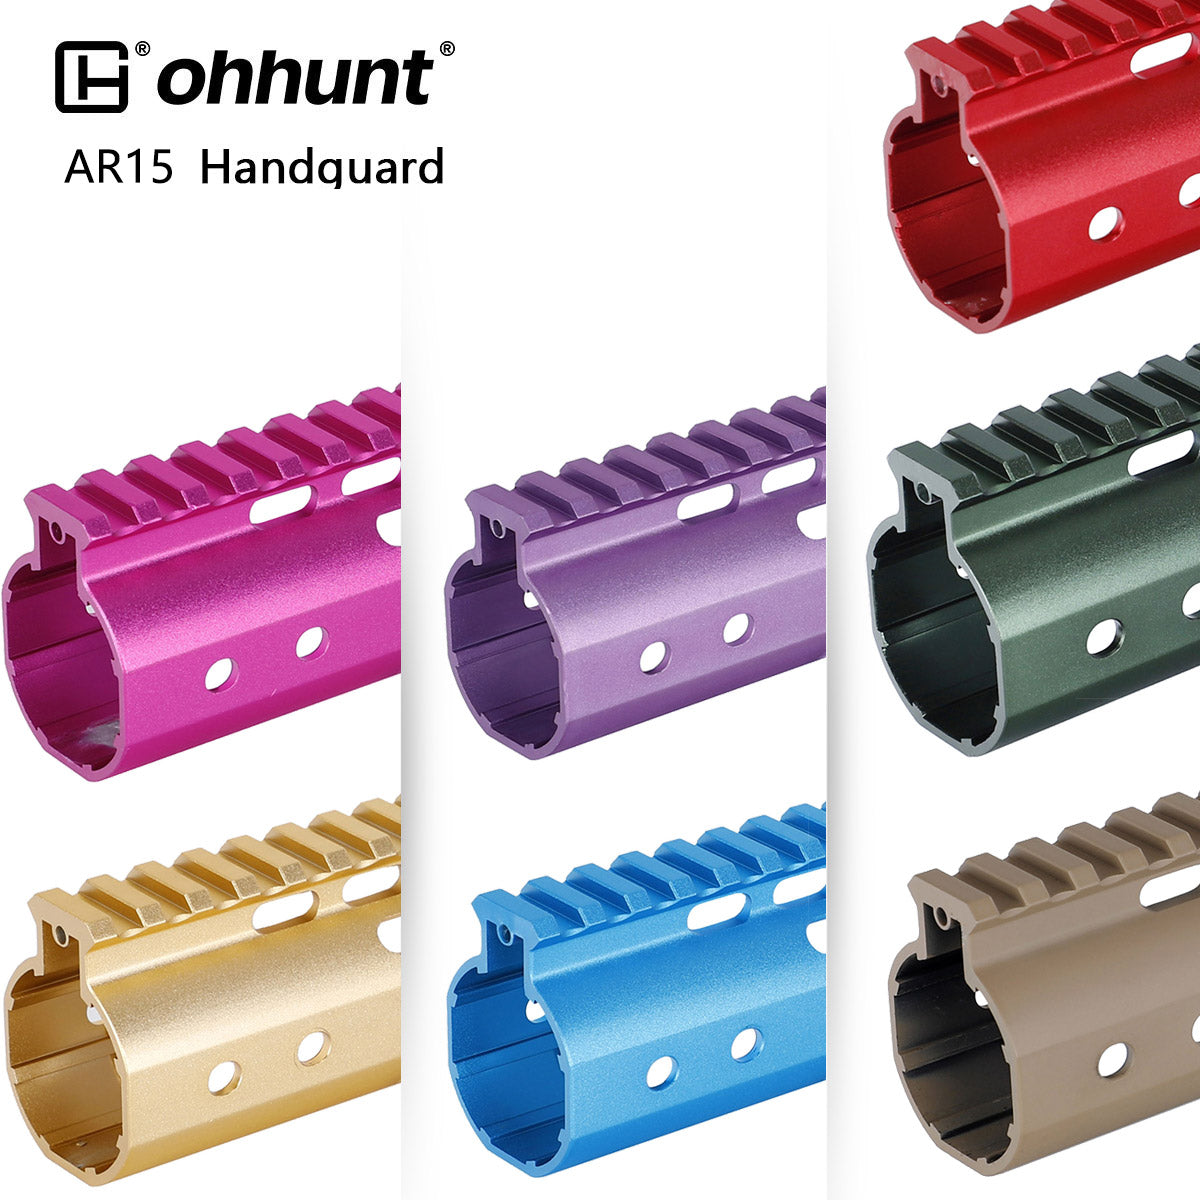 ohhunt® Colored AR-15 Handguard M-lok & Keymod in Desert Tan Blue Red